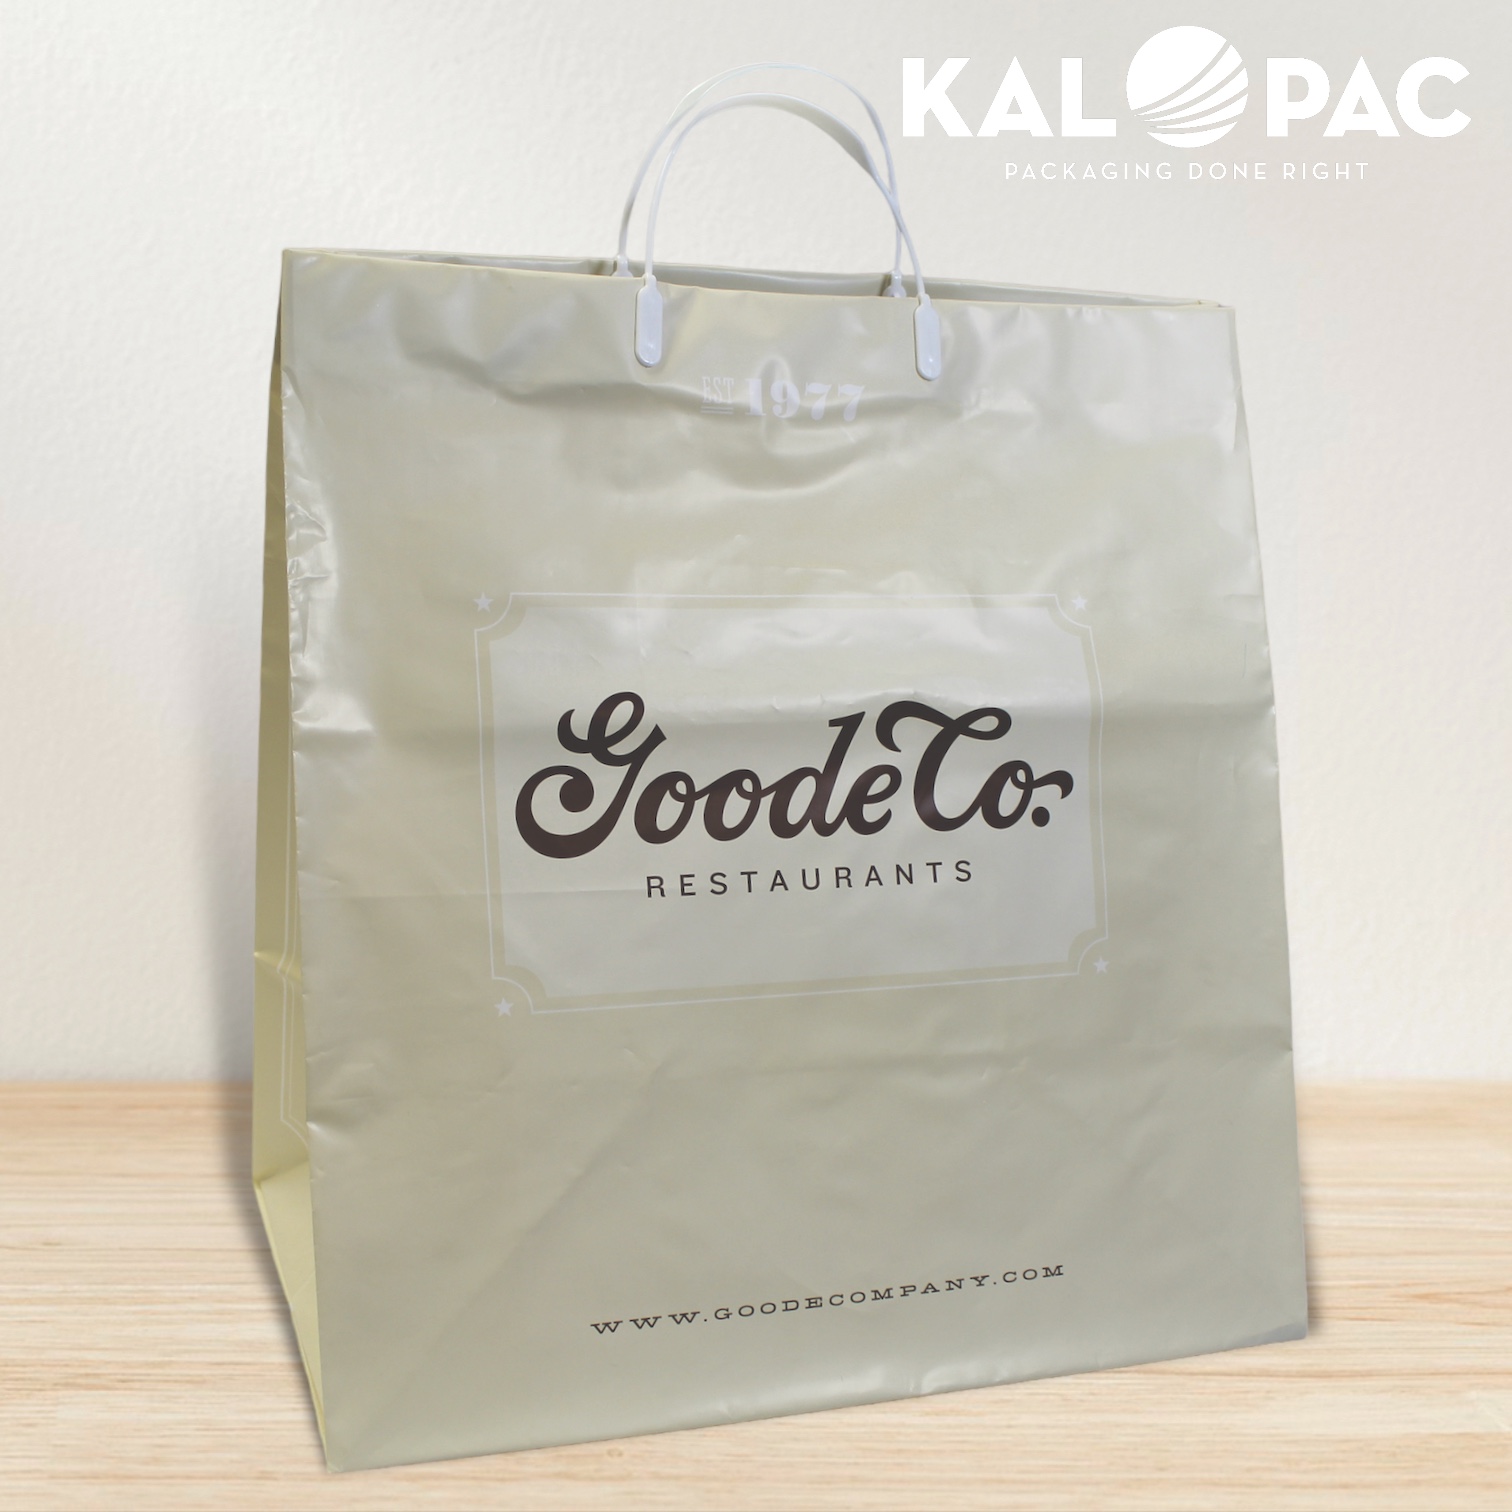 Goode Co. Restaurants Clip-Loop Bag